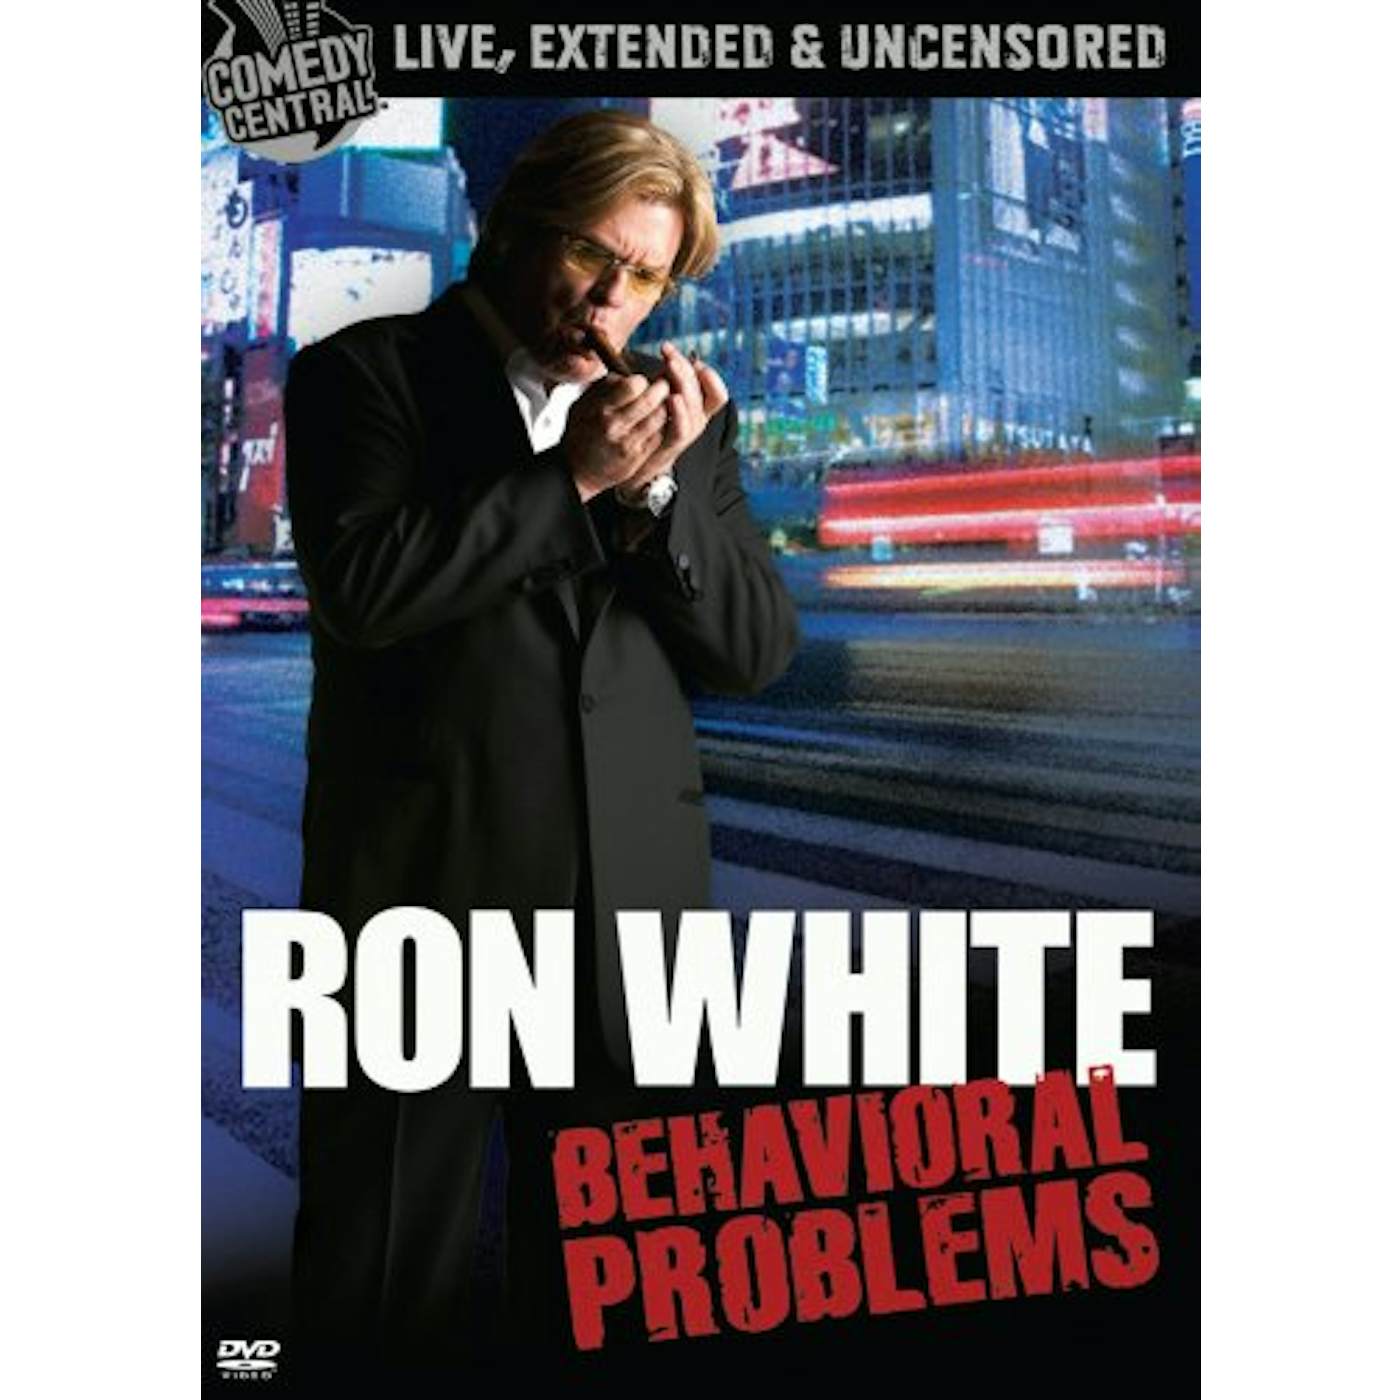 Ron White BEHAVIORAL PROBLEMS DVD